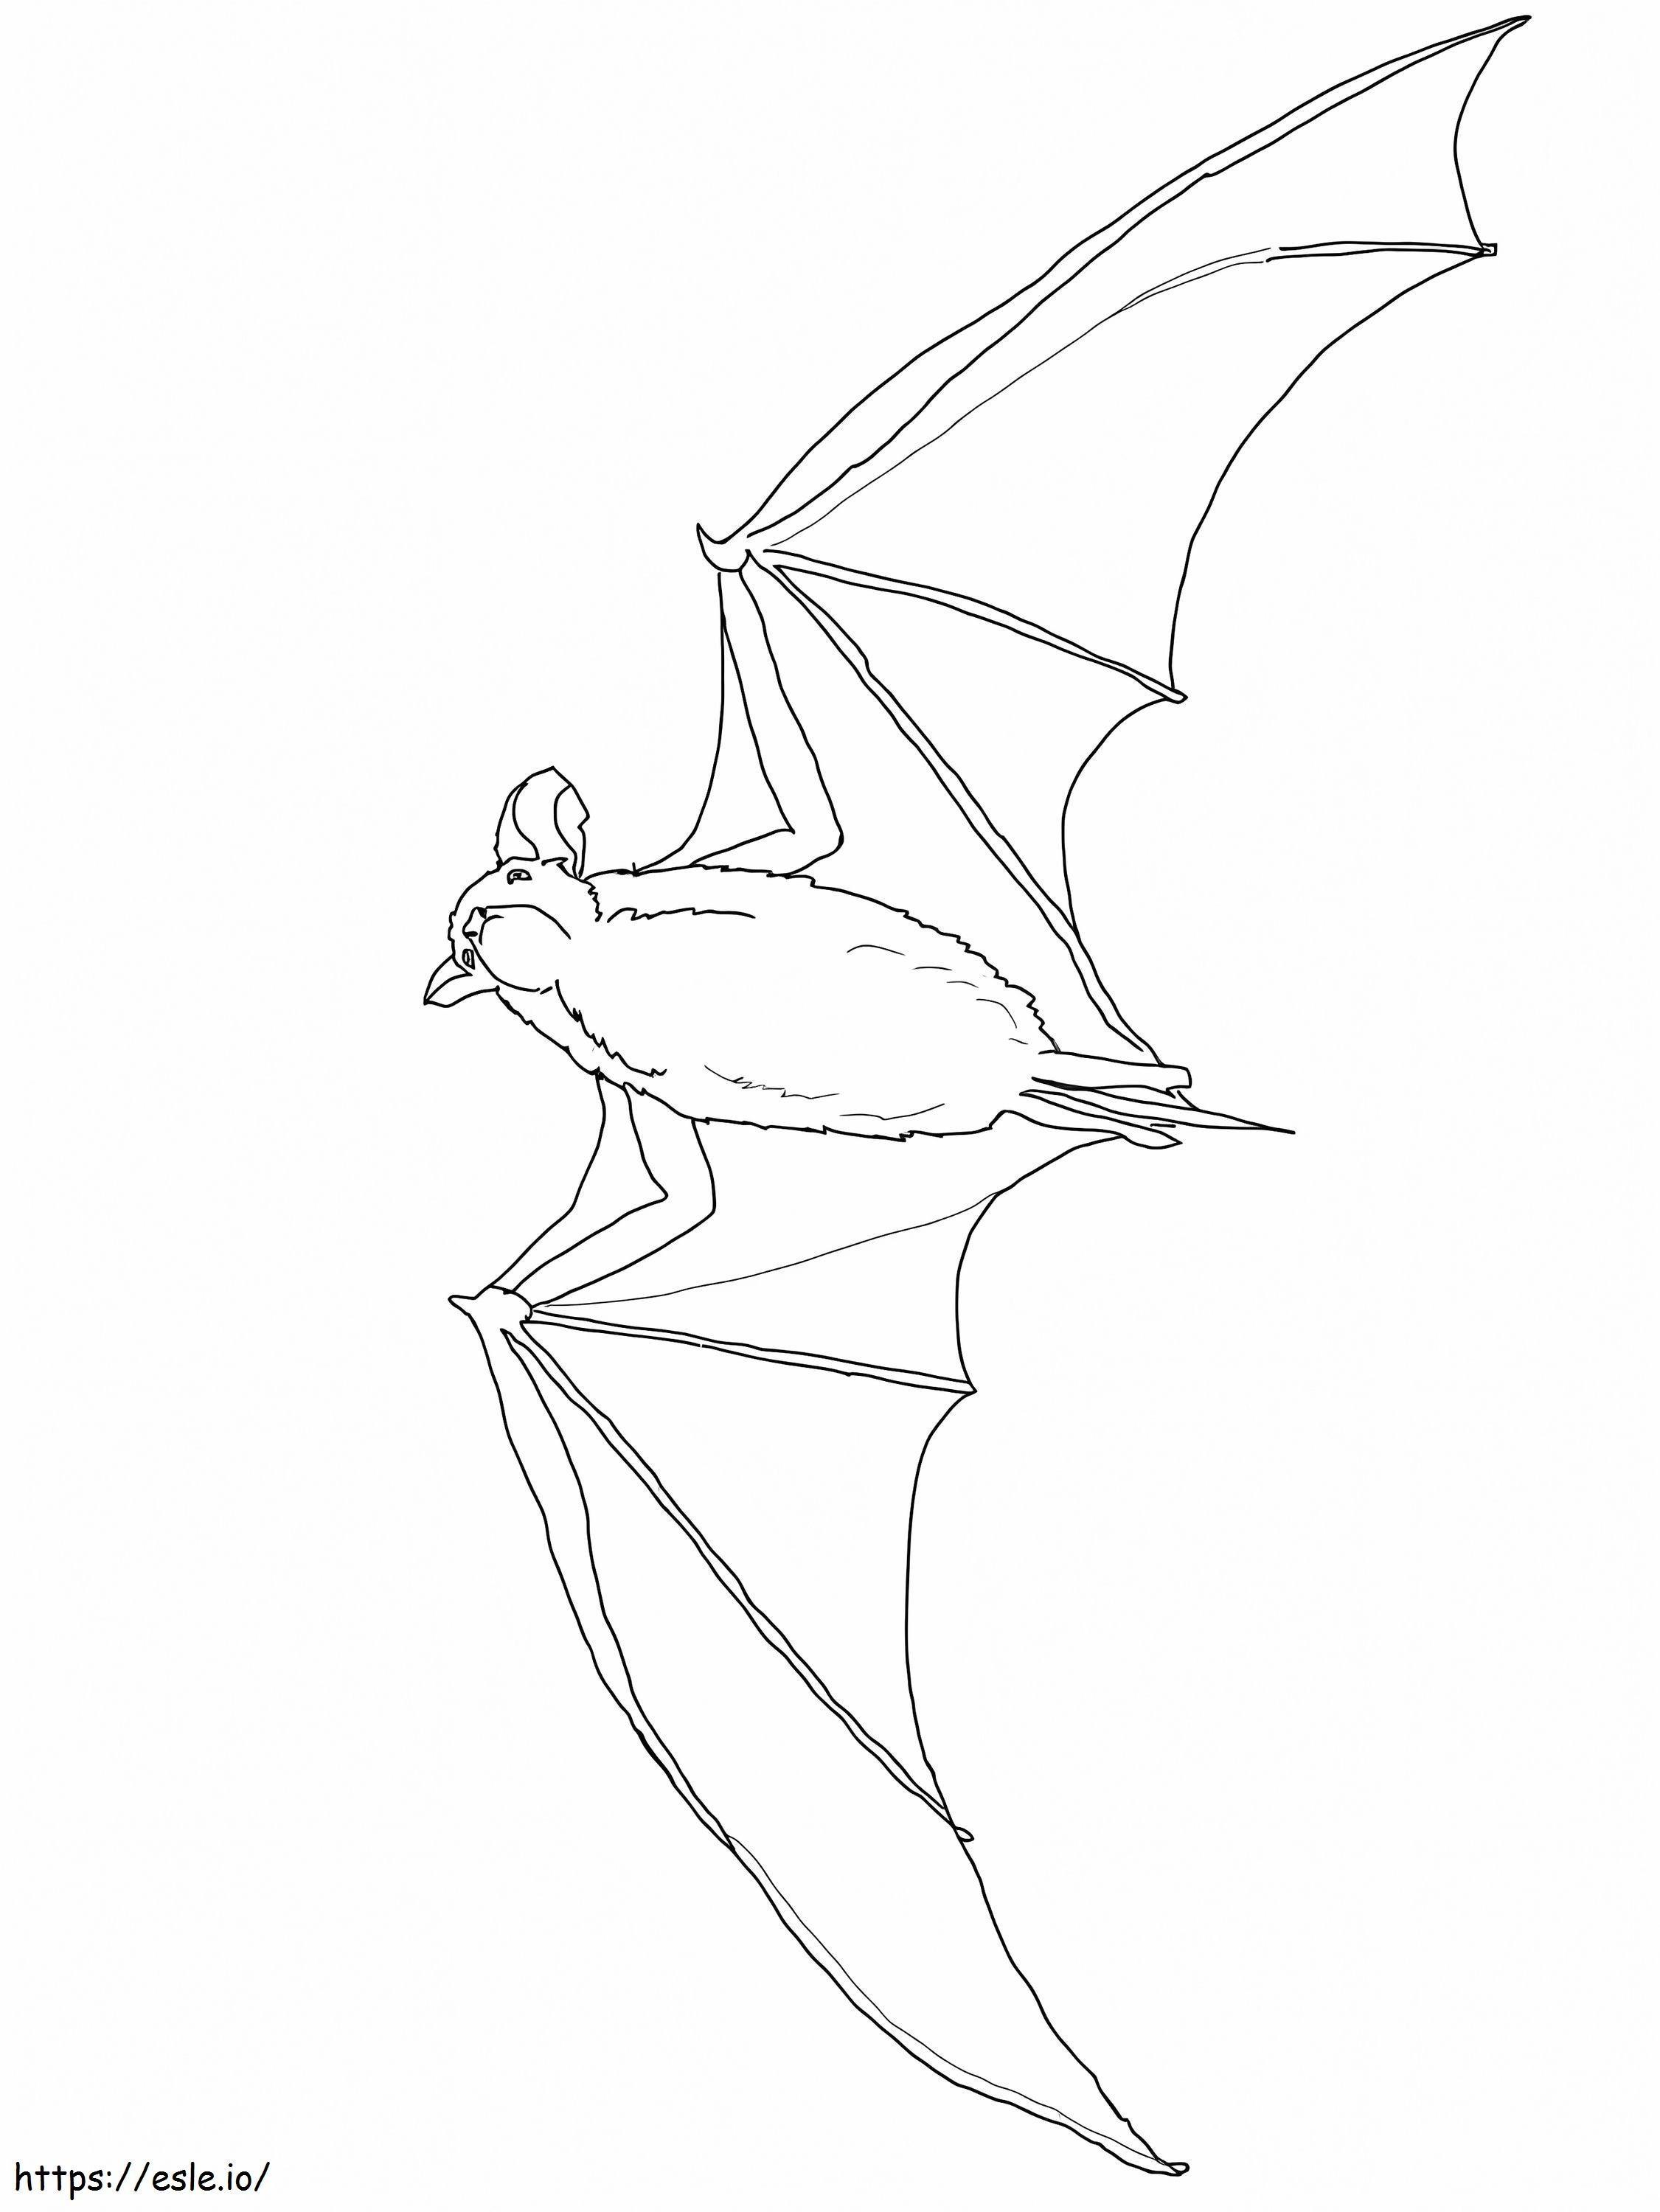 Morcego de cauda livre mexicano para colorir